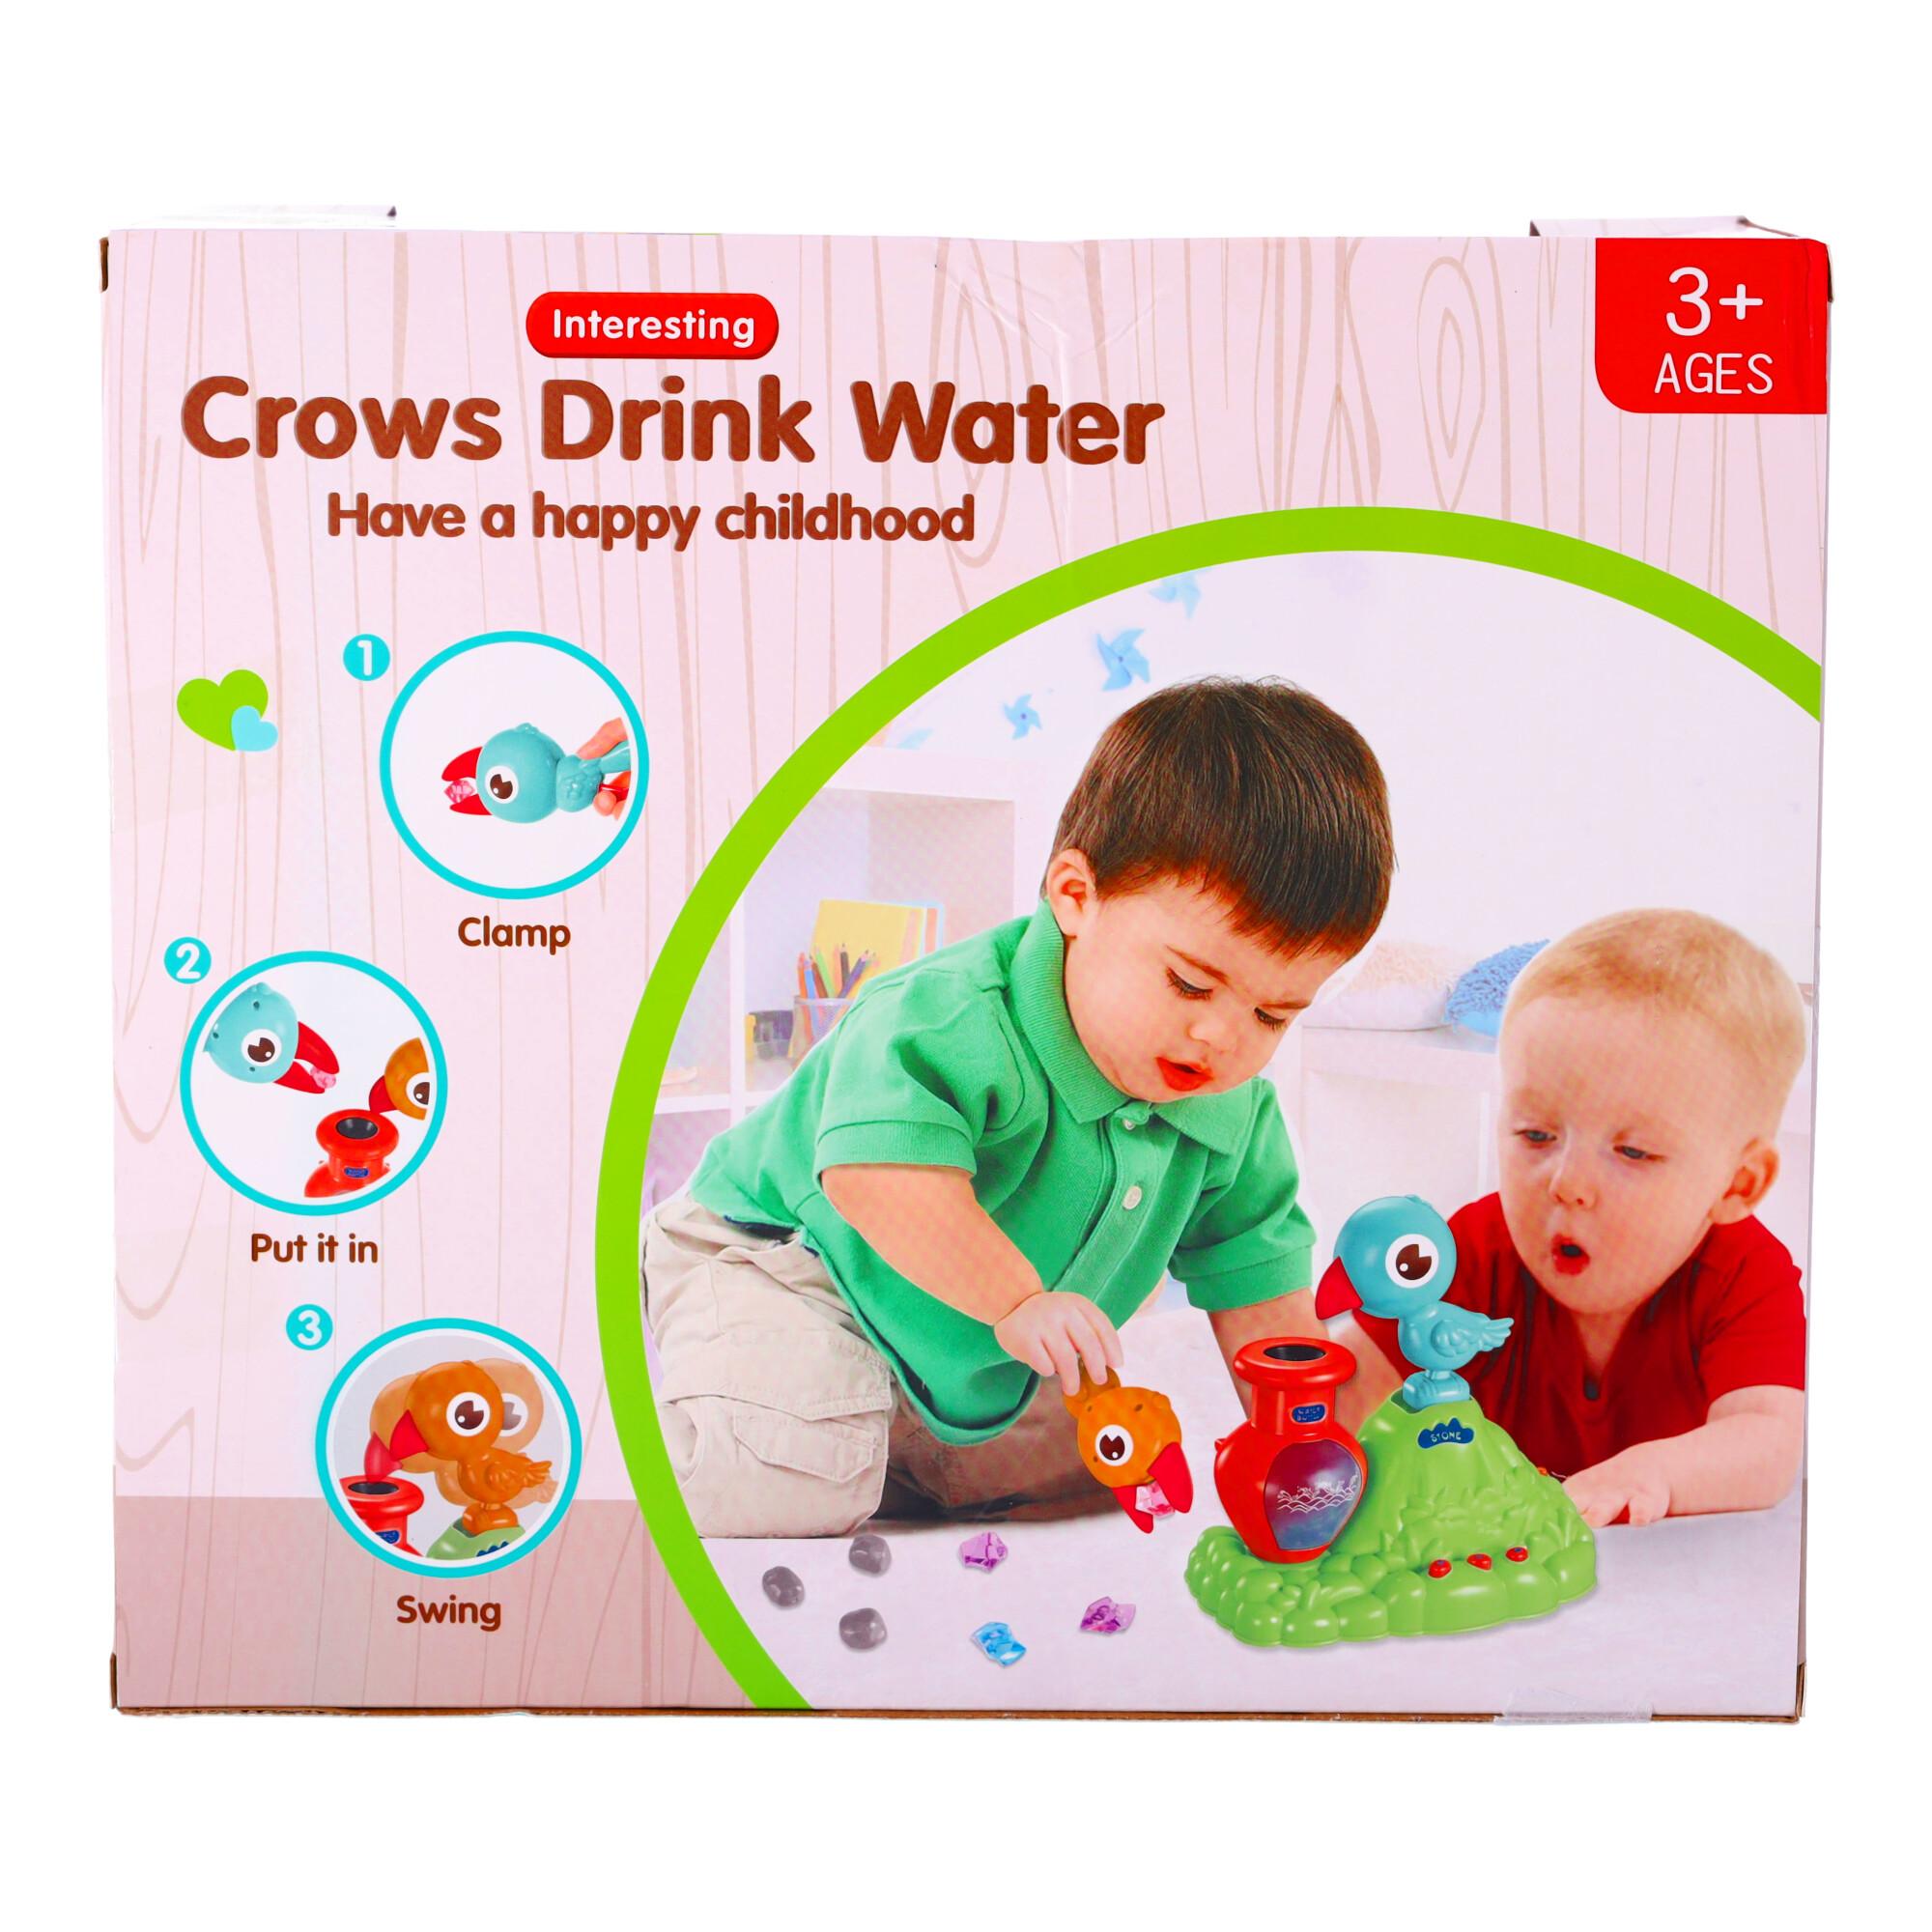 Crow drinks water set toy-model